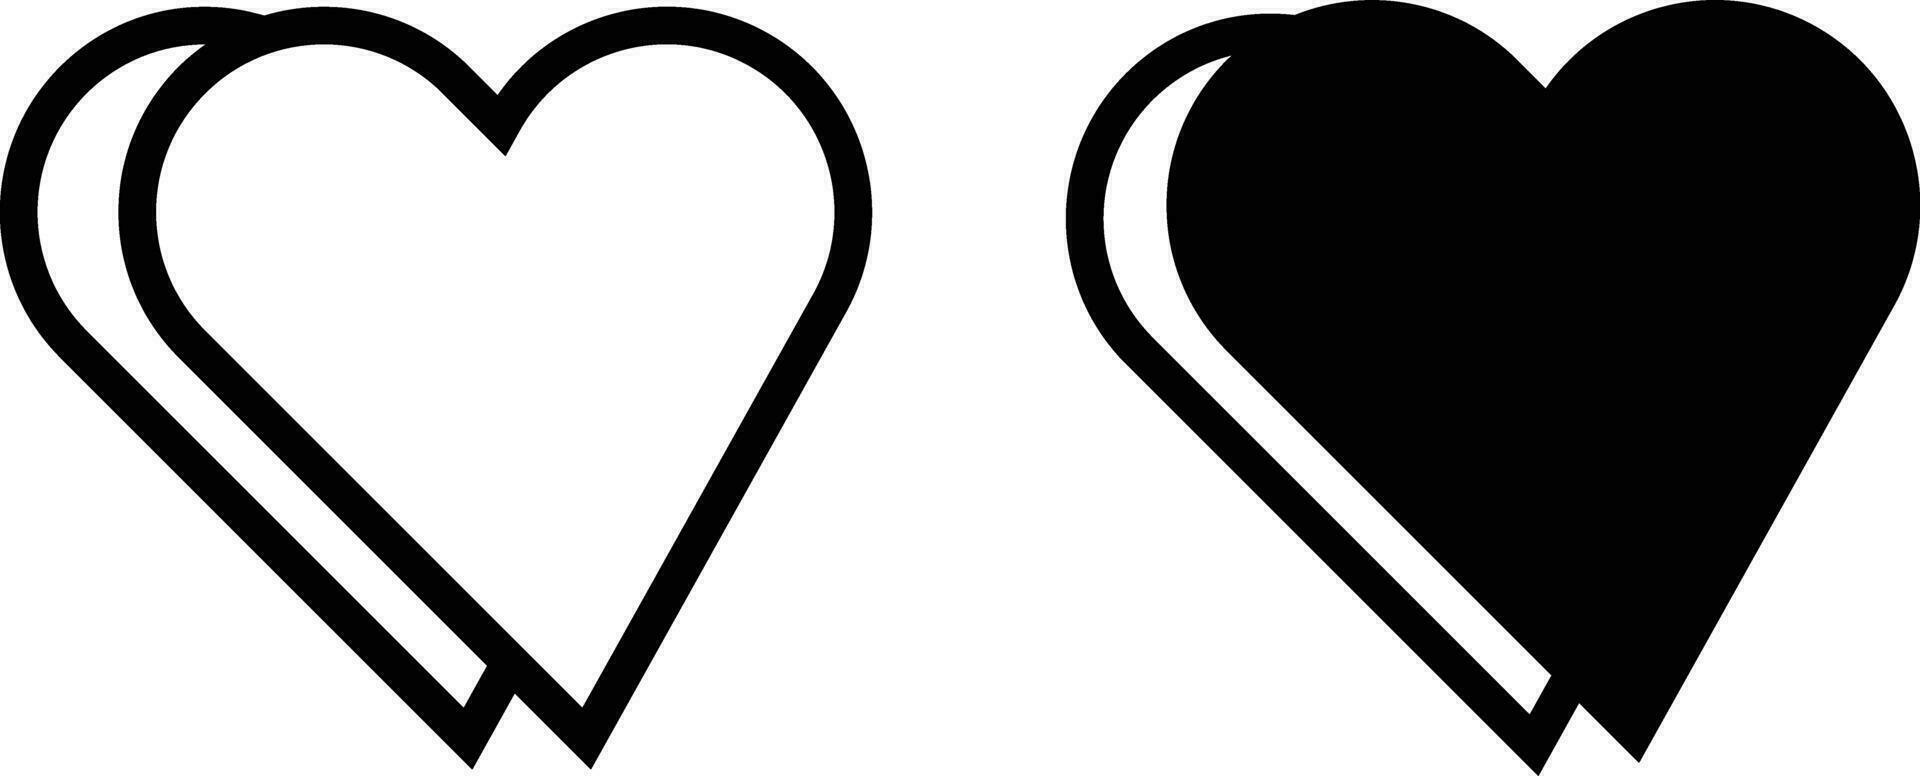 Heart vector icons. love symbols isolated.